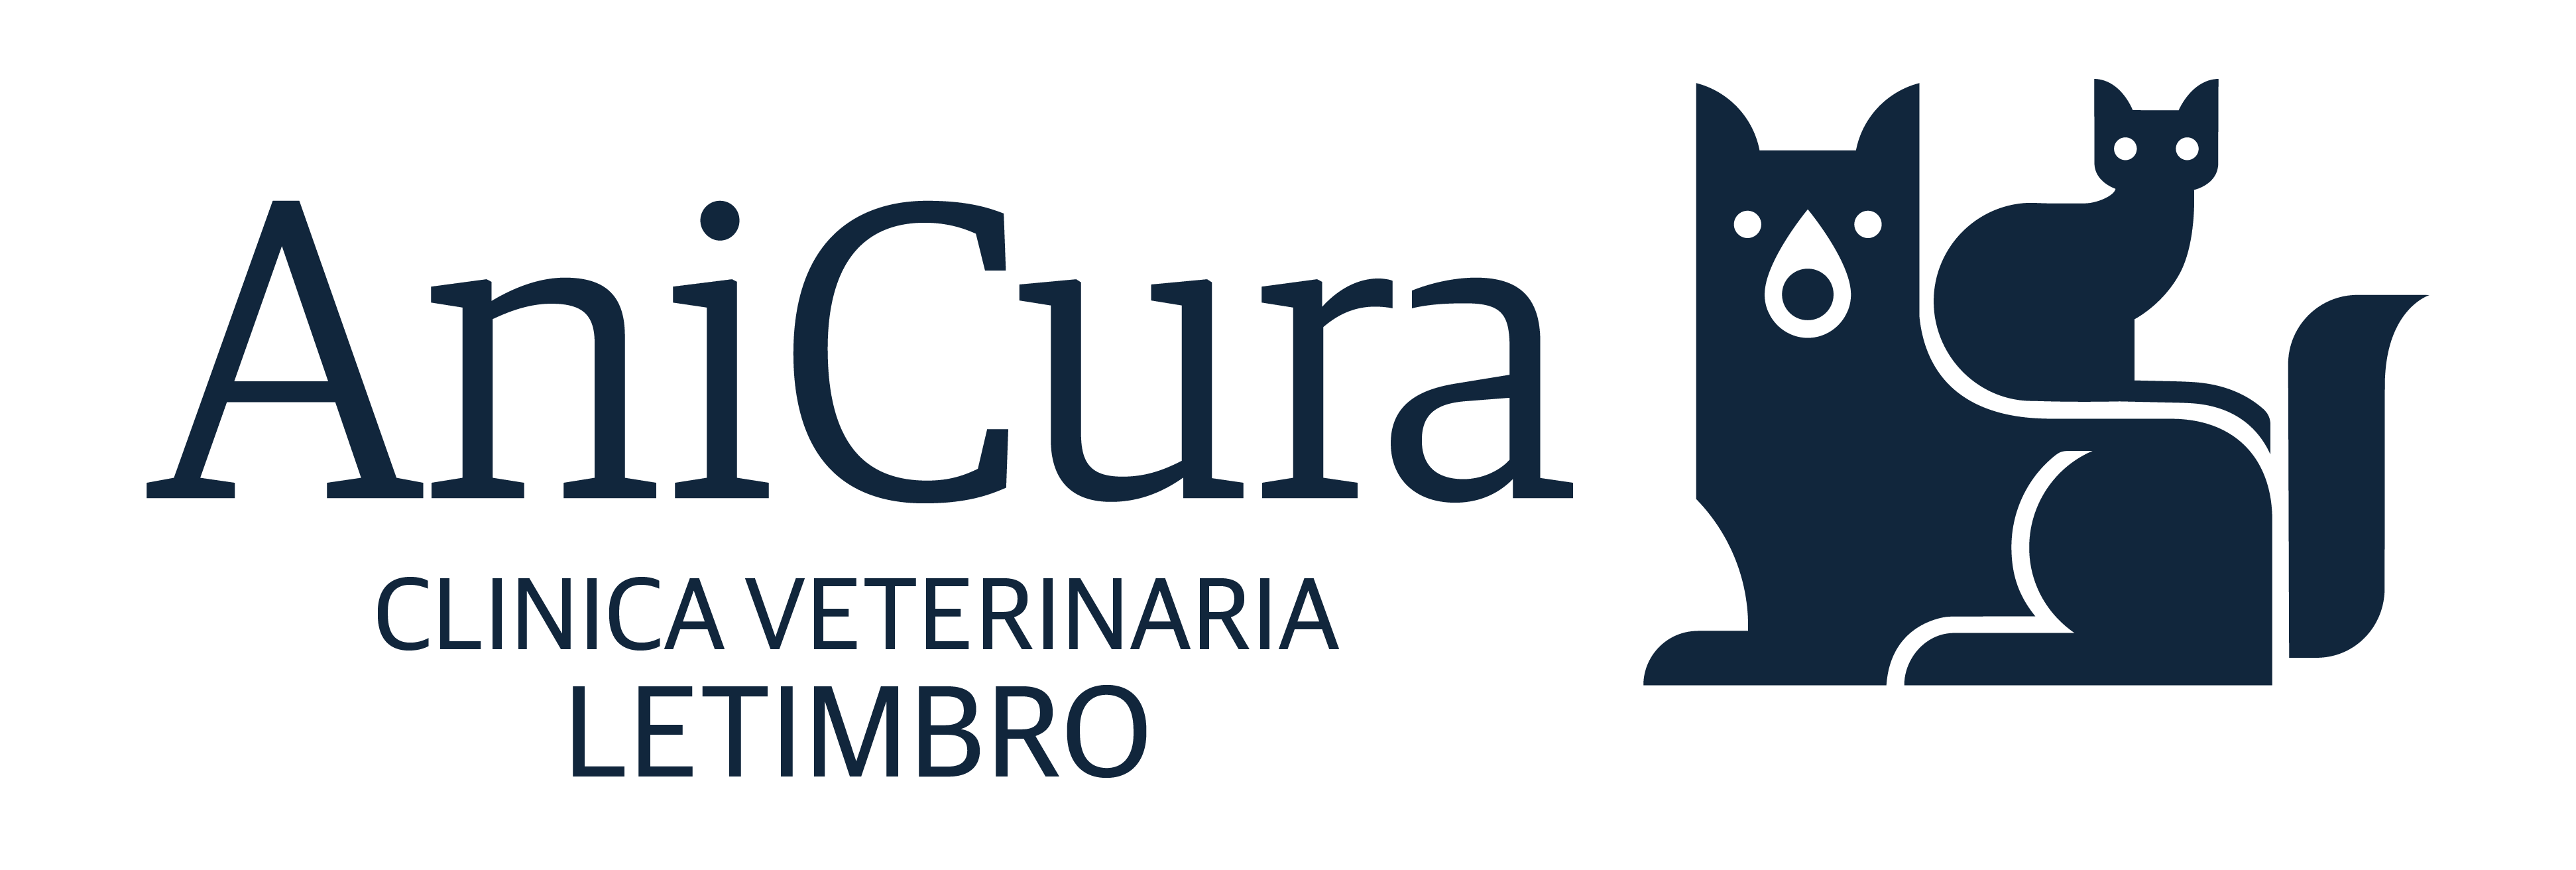 Clinica Veterinaria Letimbro logo